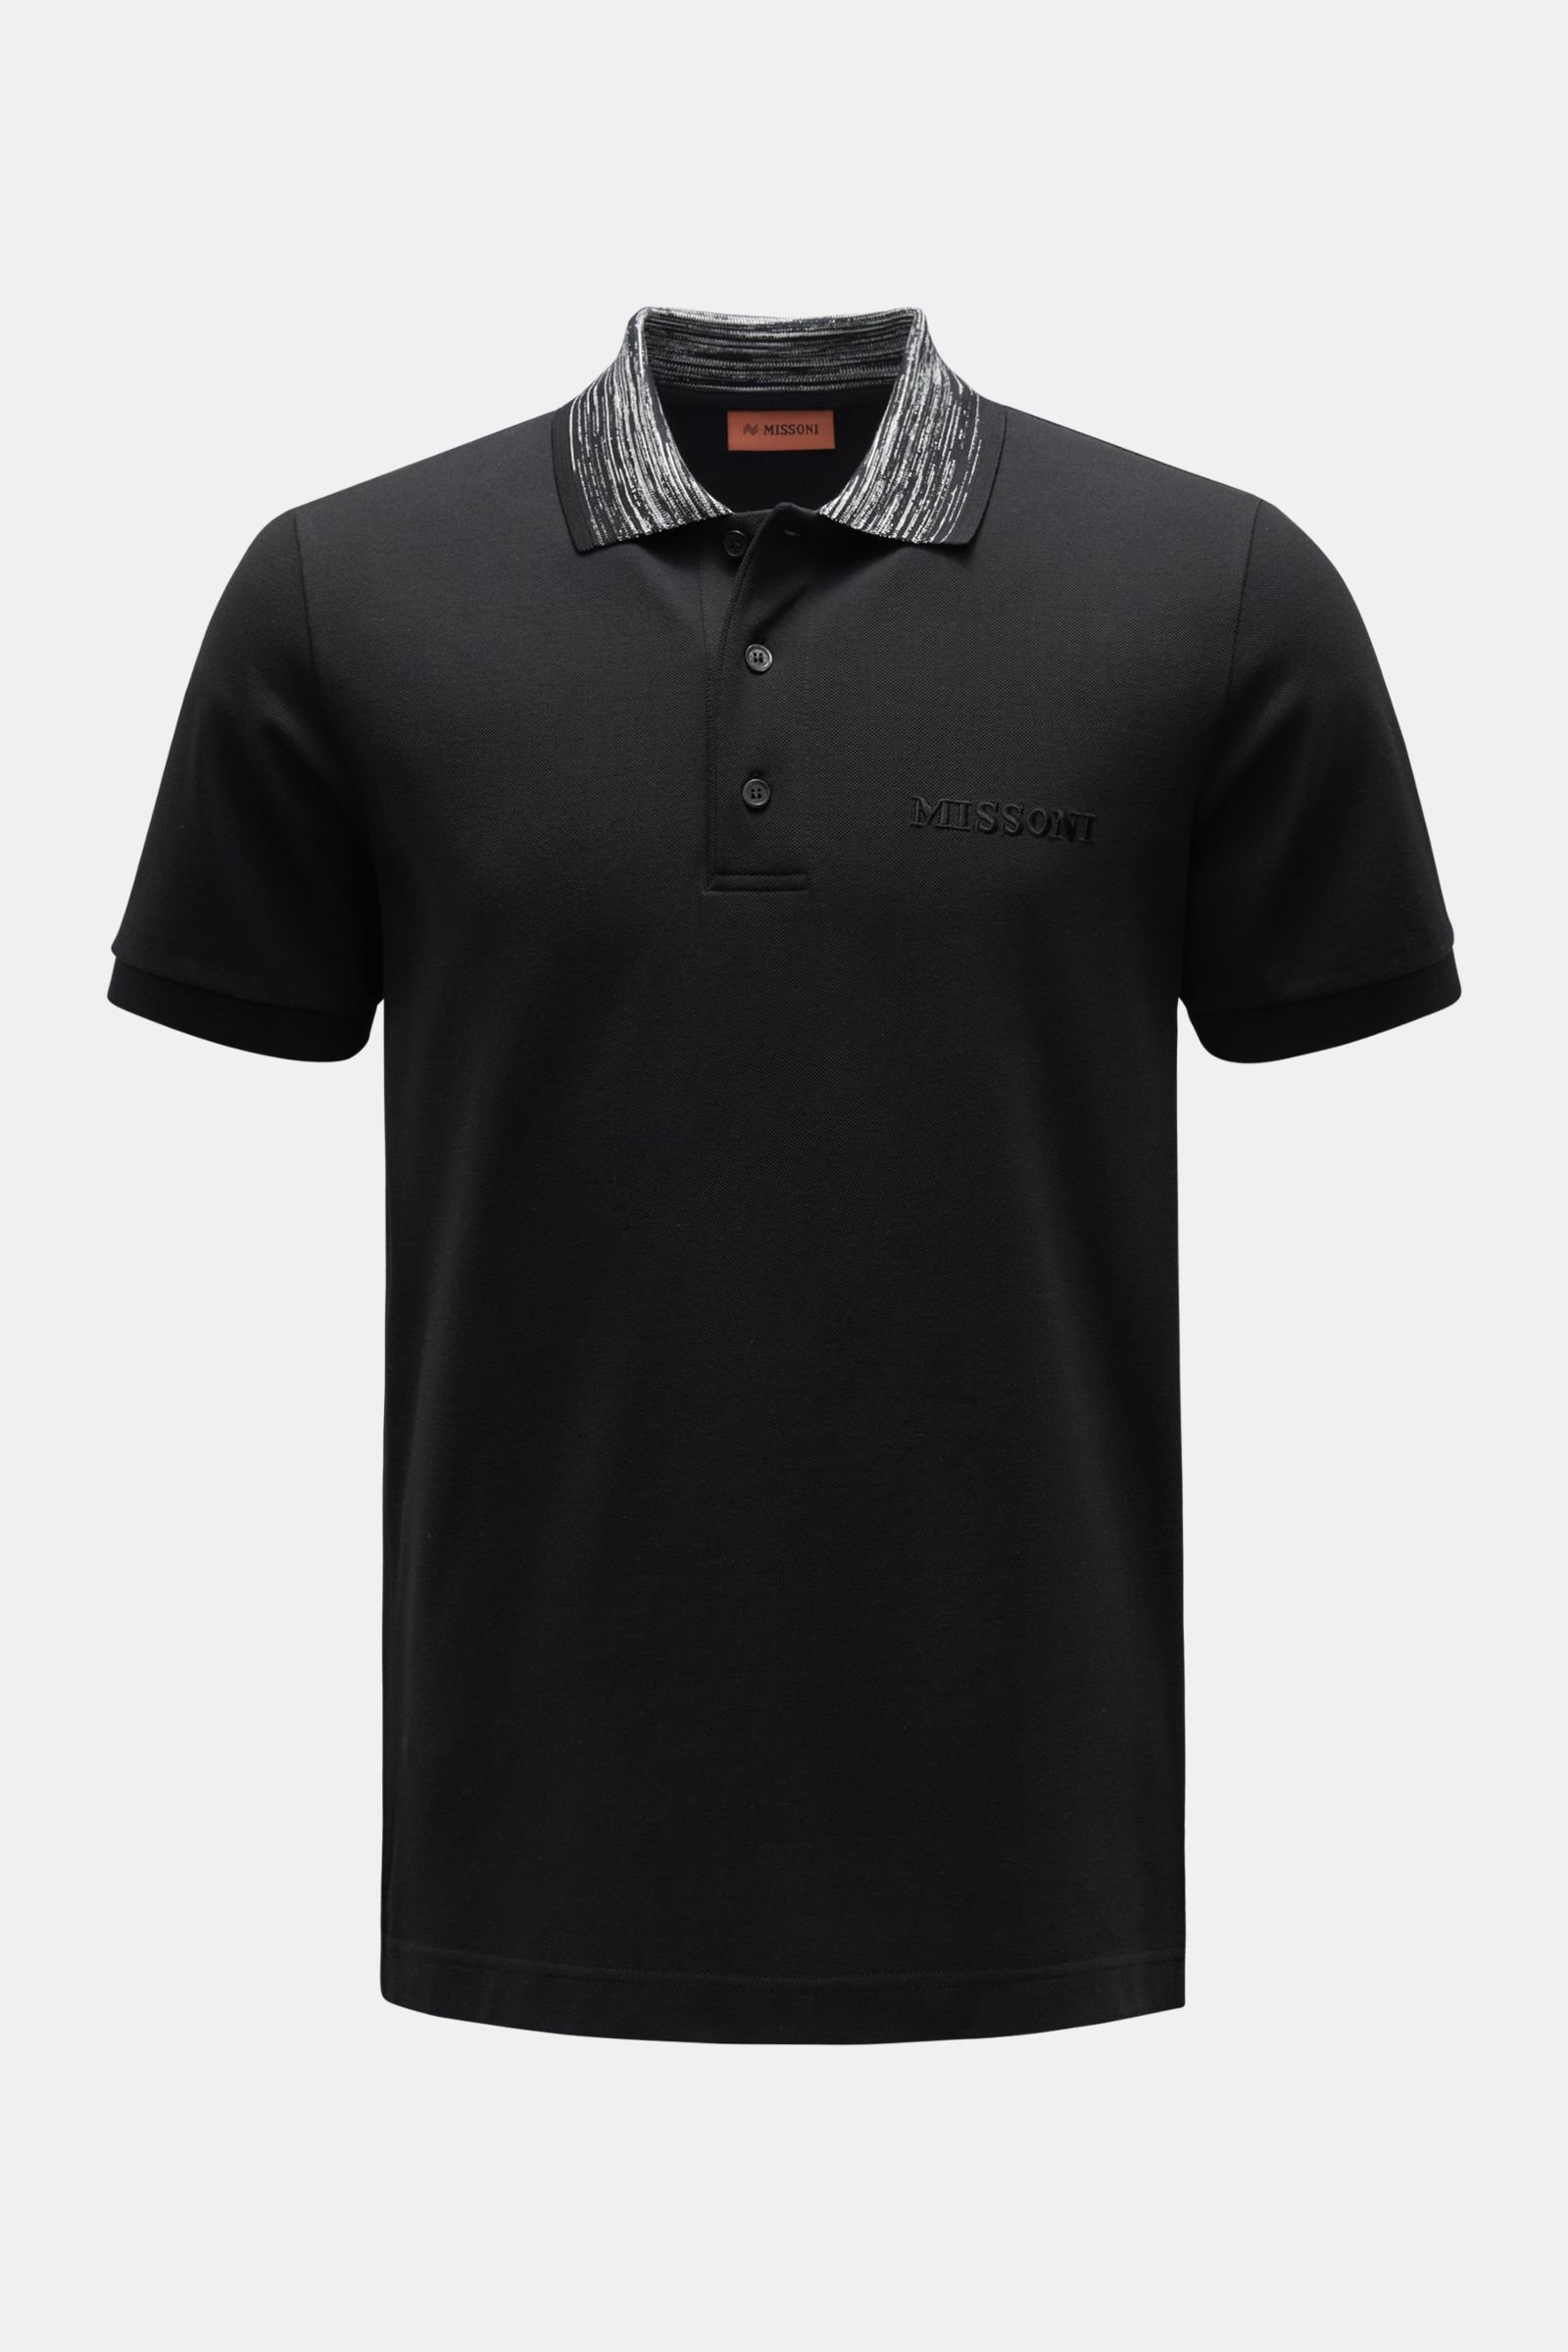 Polo shirt black